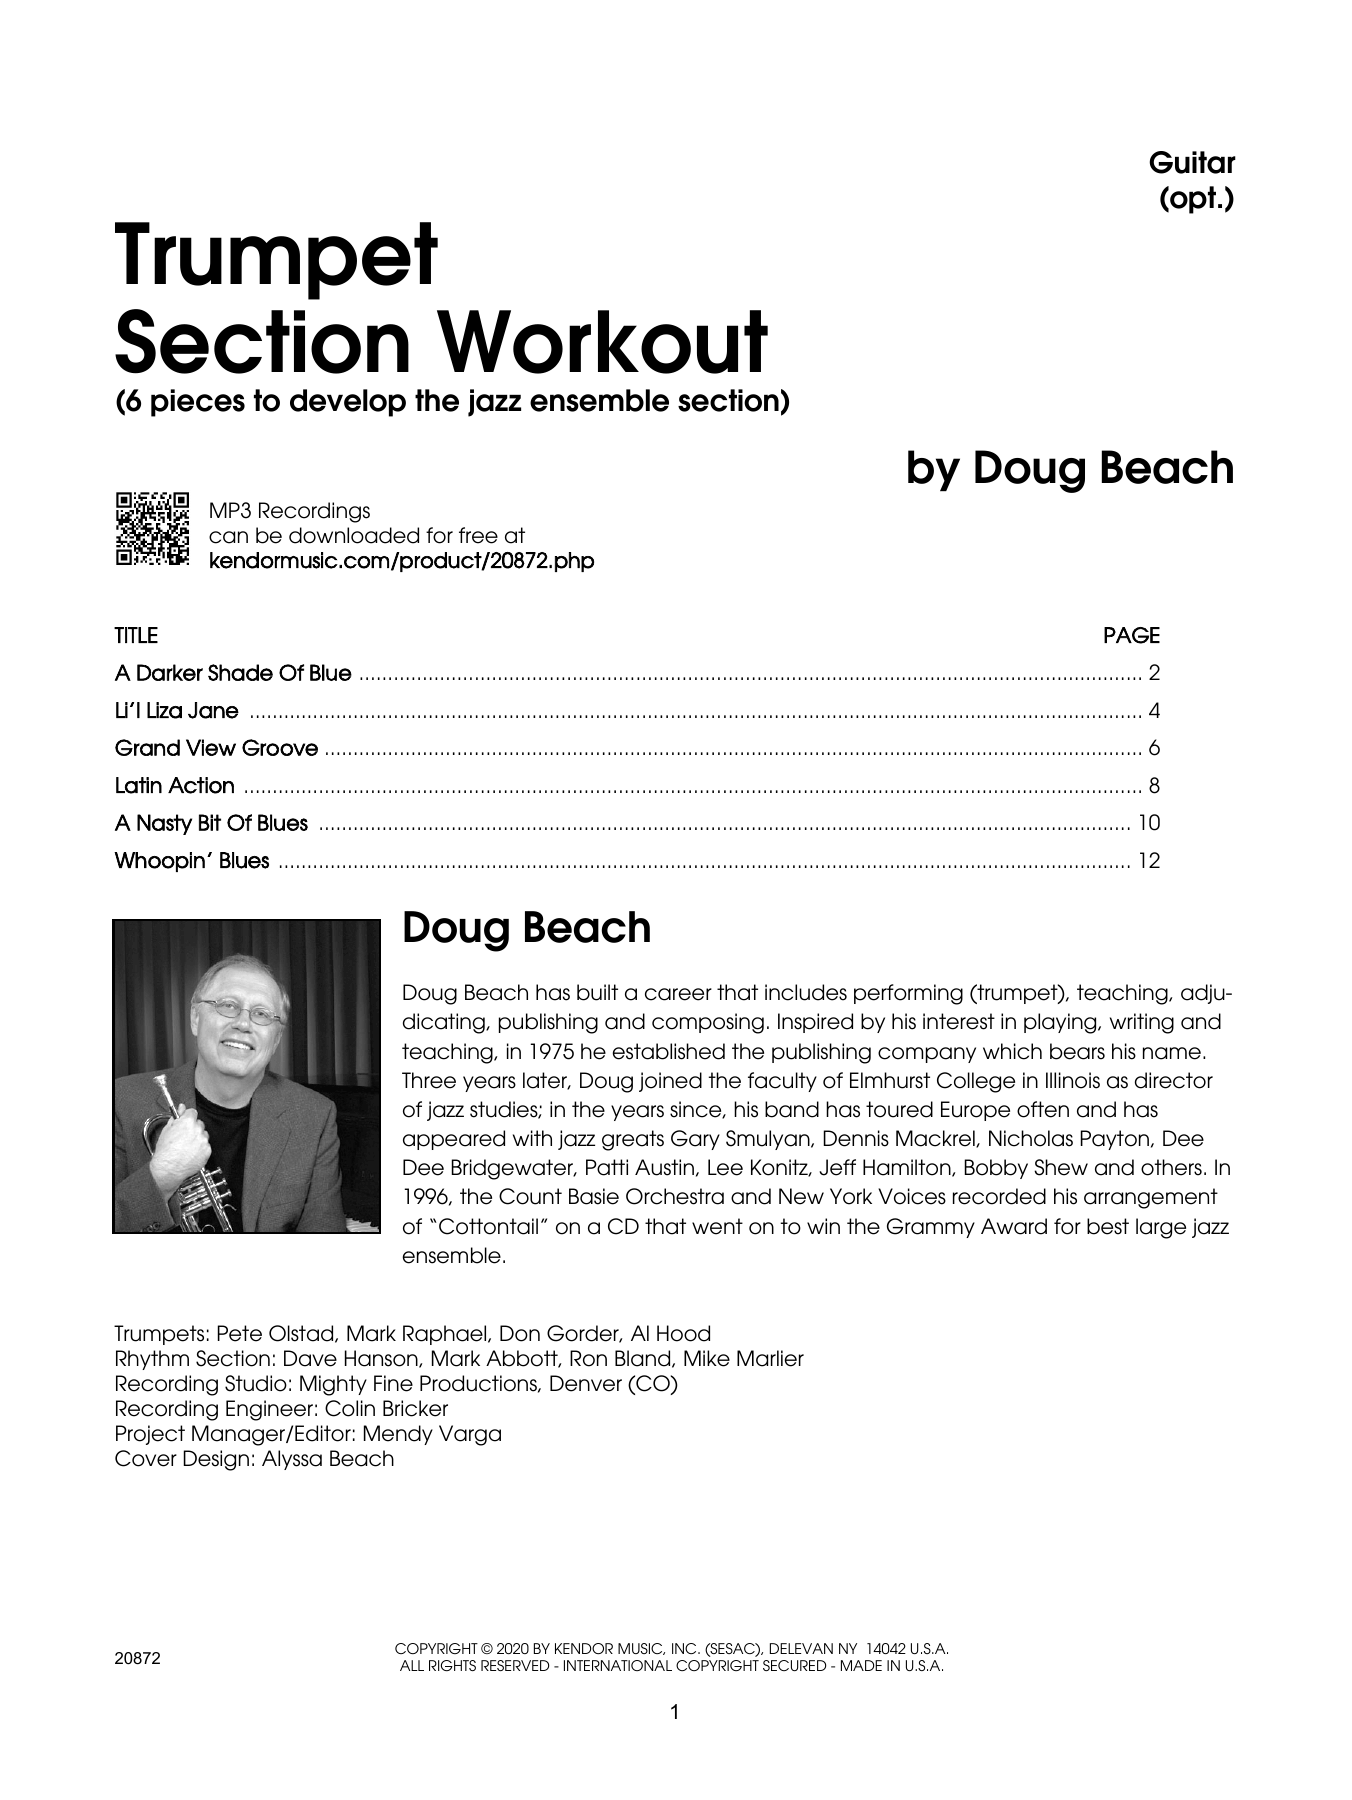 Trumpet Section Workout with MP3's (6 pieces to develop the jazz ensemble section) - Guitar (Brass Ensemble) von Doug Beach